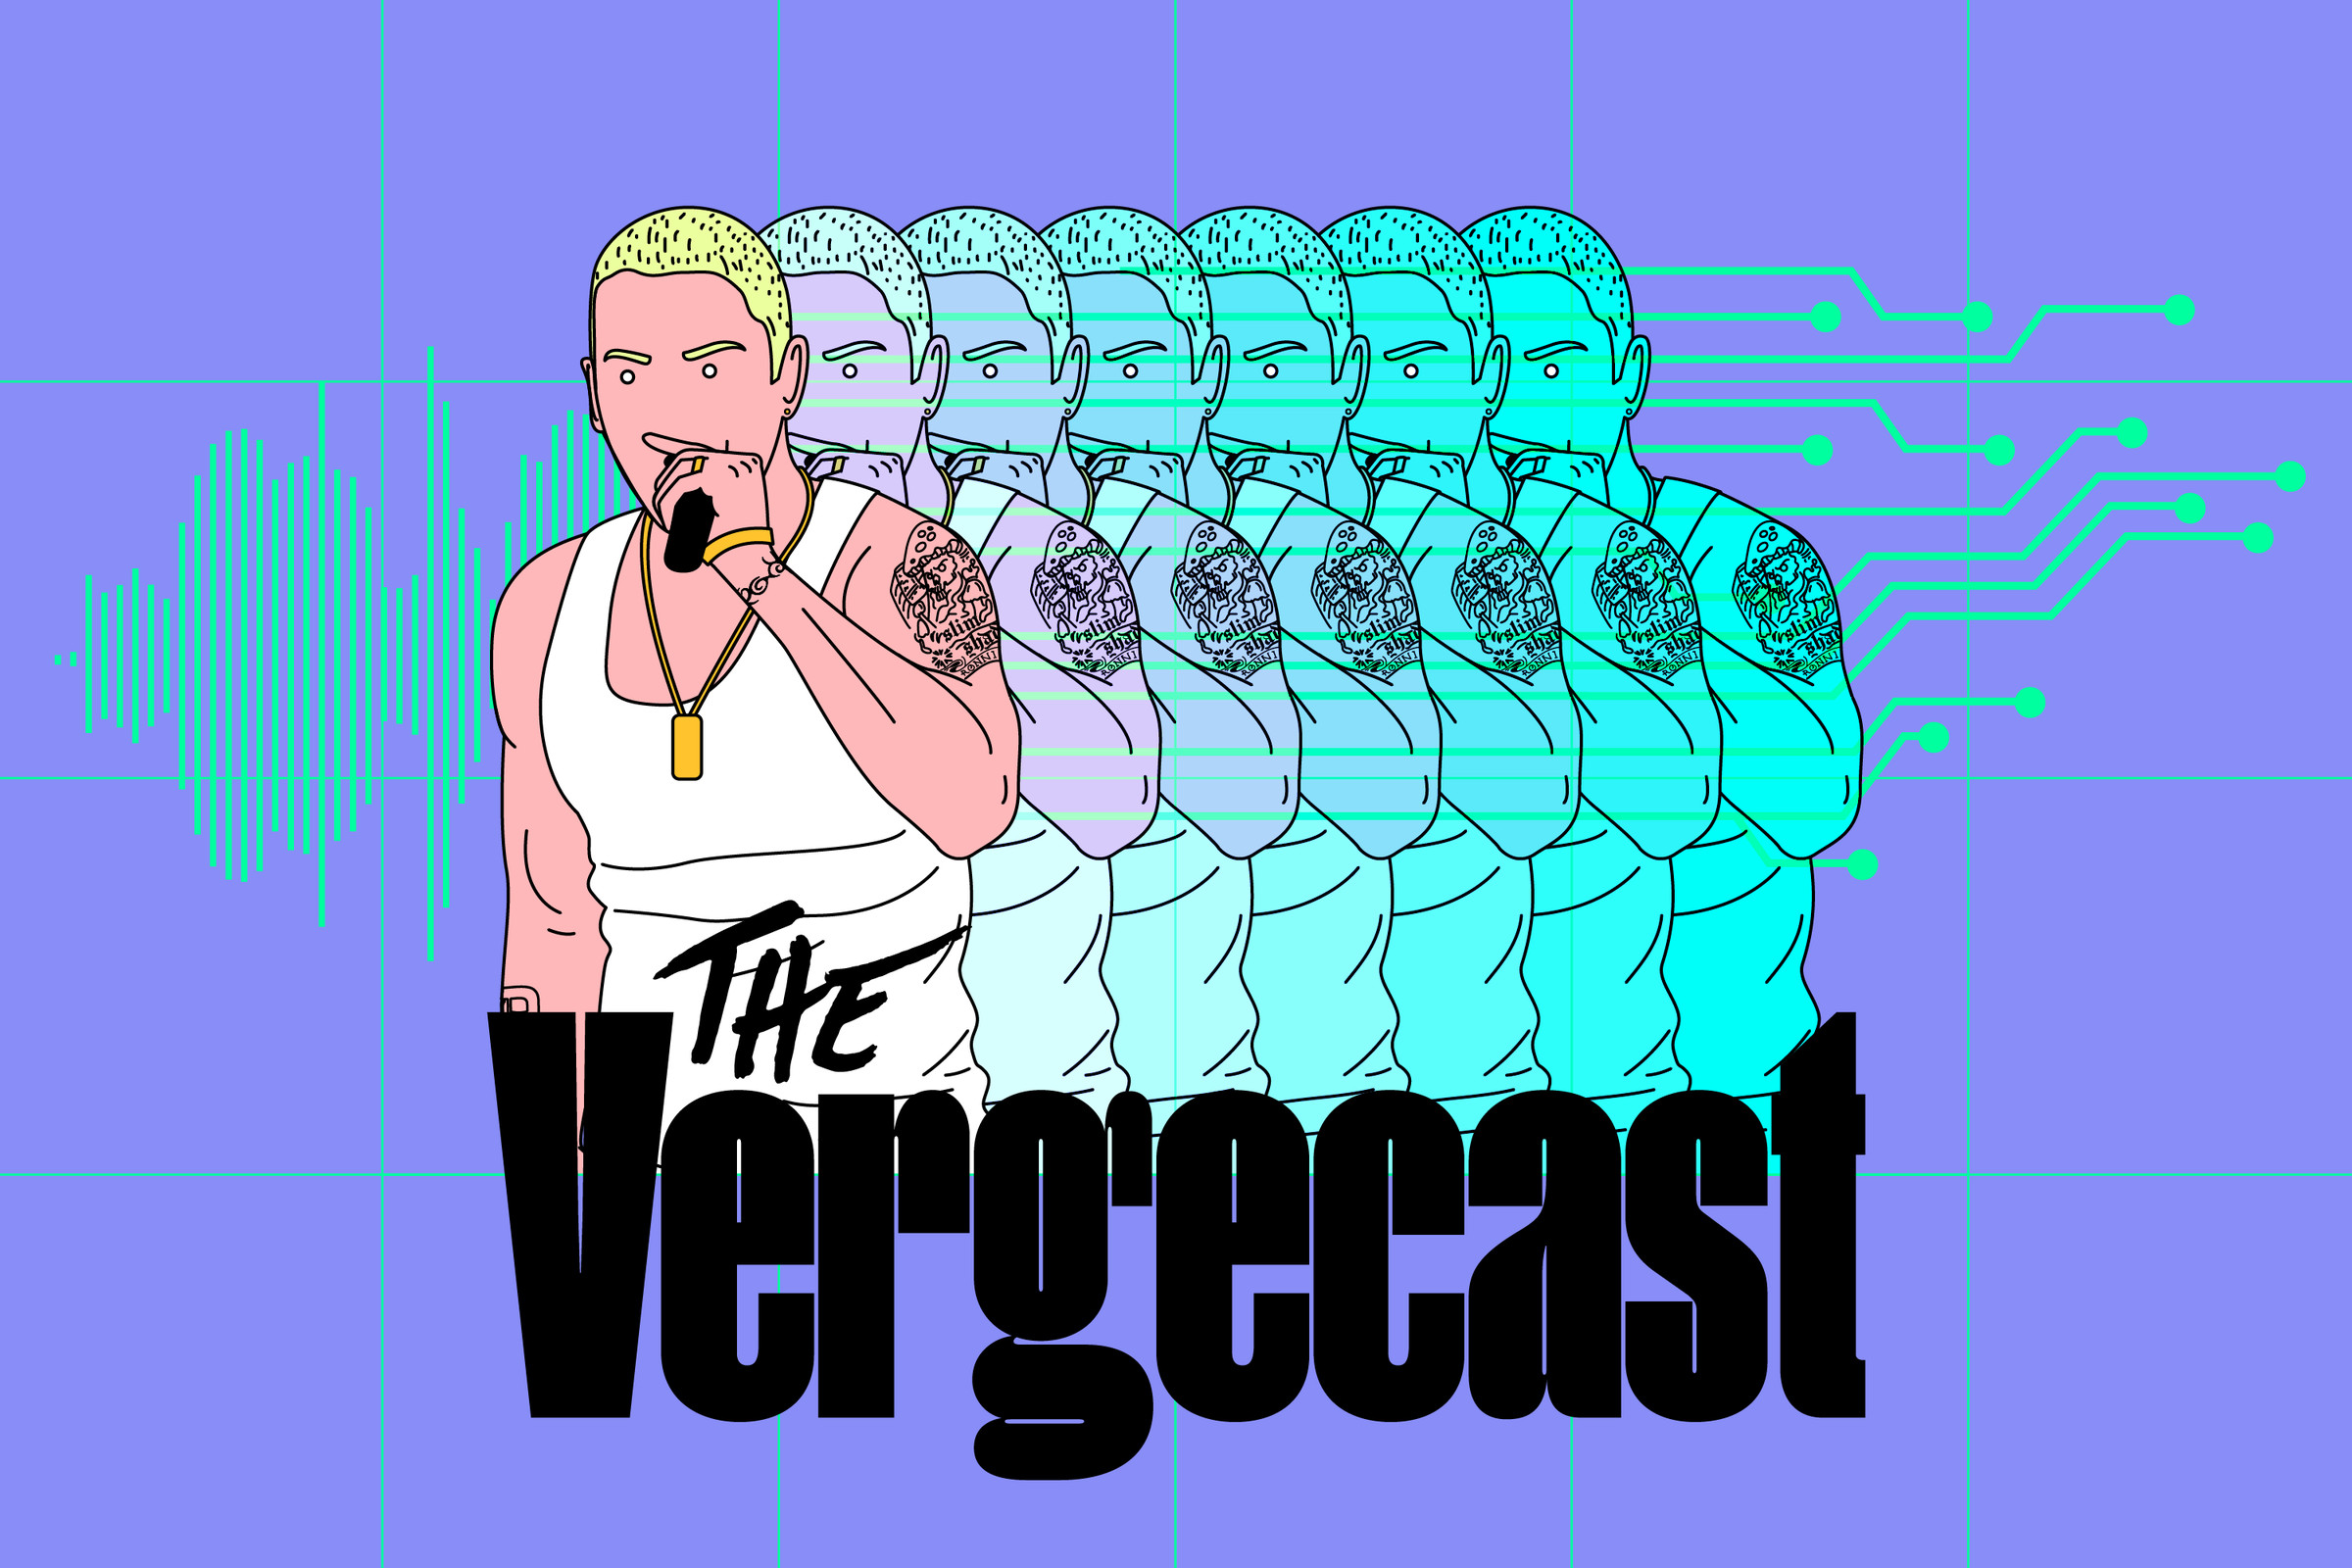 Illustration of the Vergecast logo